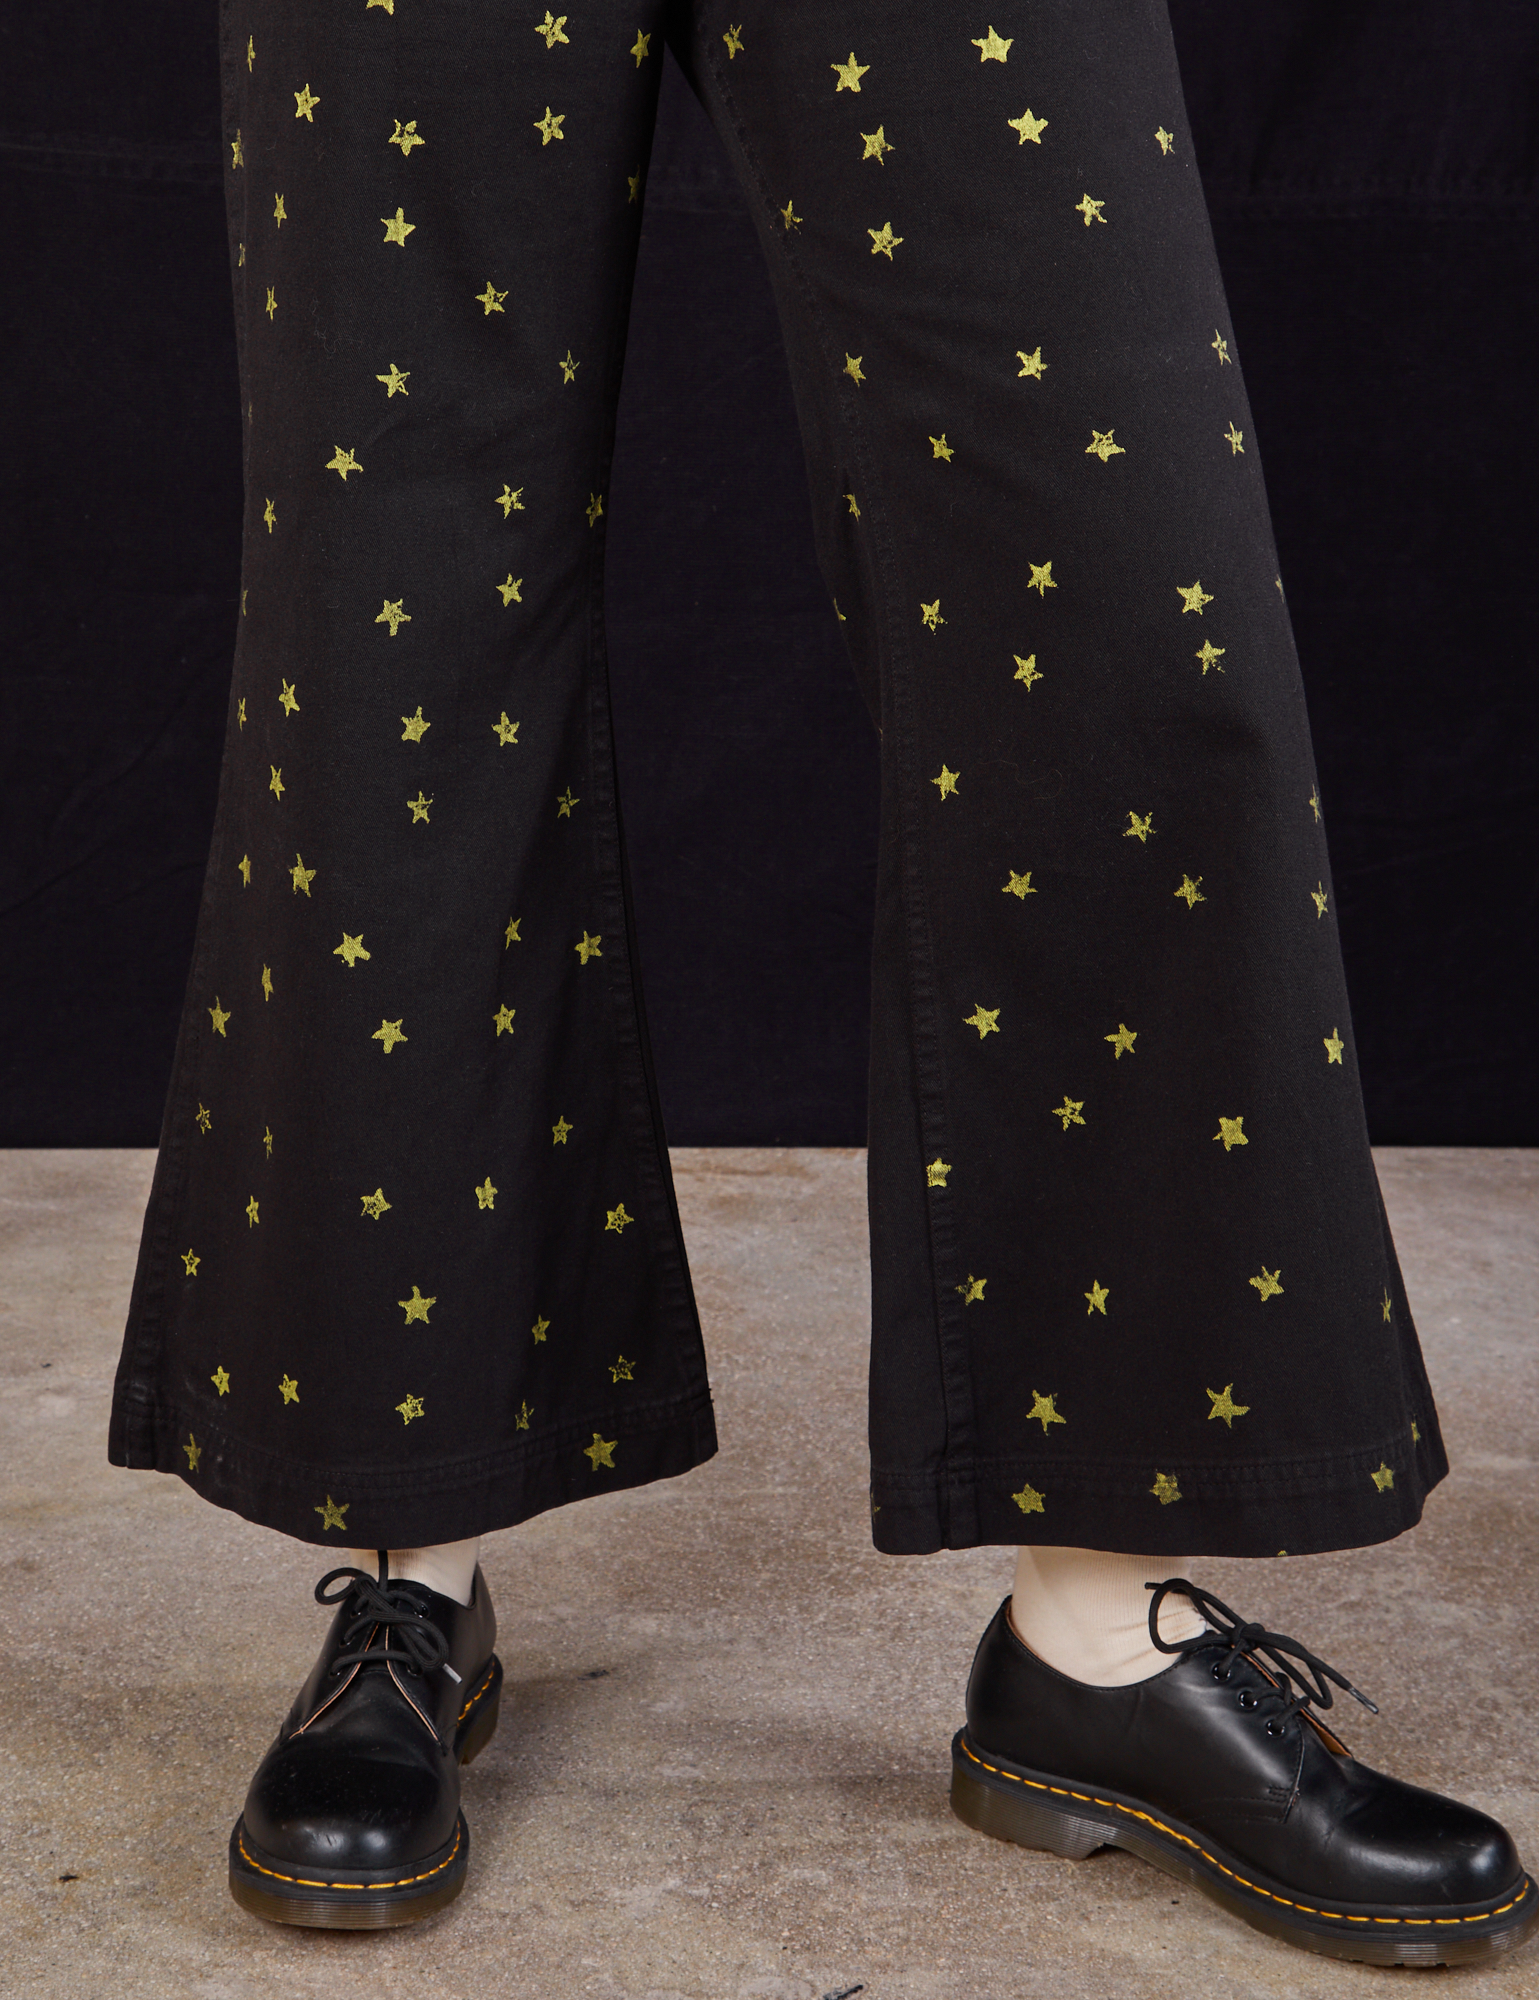 Star Bell Bottoms in Black pant leg close up on Margaret